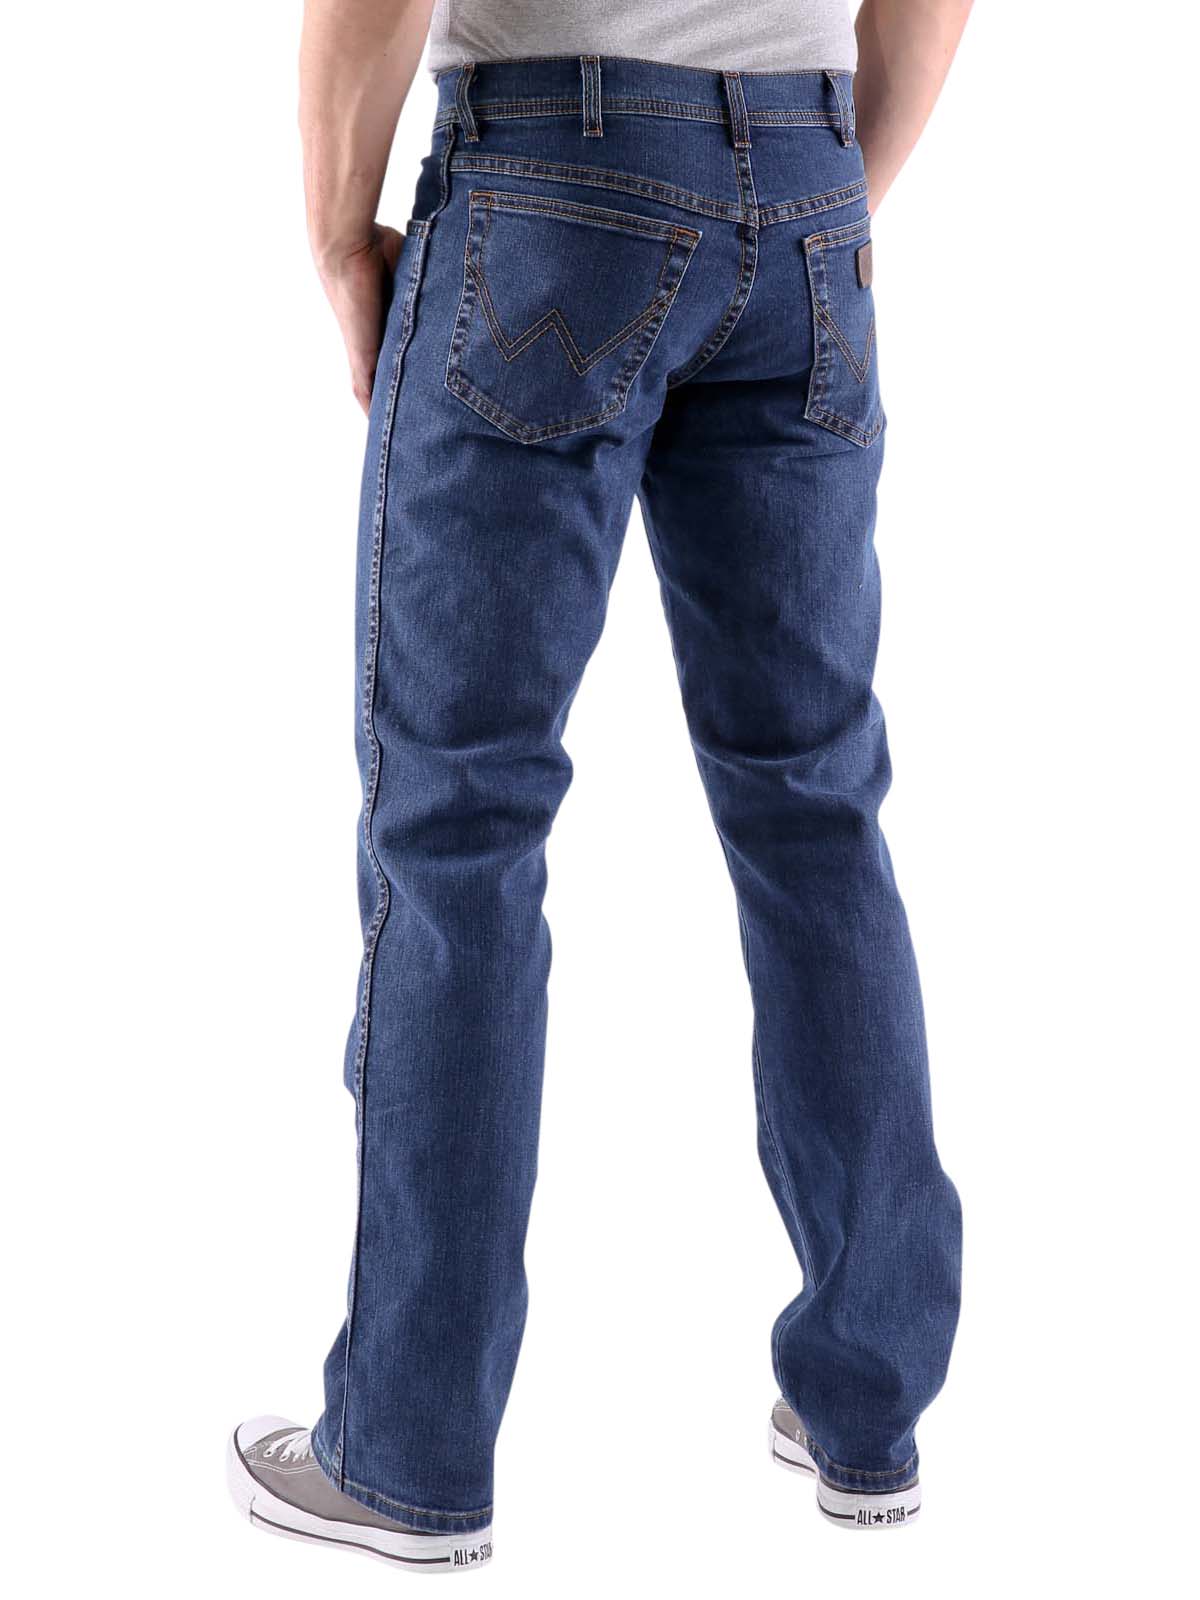 Wrangler Texas Stretch Jeans darkstone Wrangler Men's Jeans | Free Shipping  on  - SIMPLY LOOK GOOD